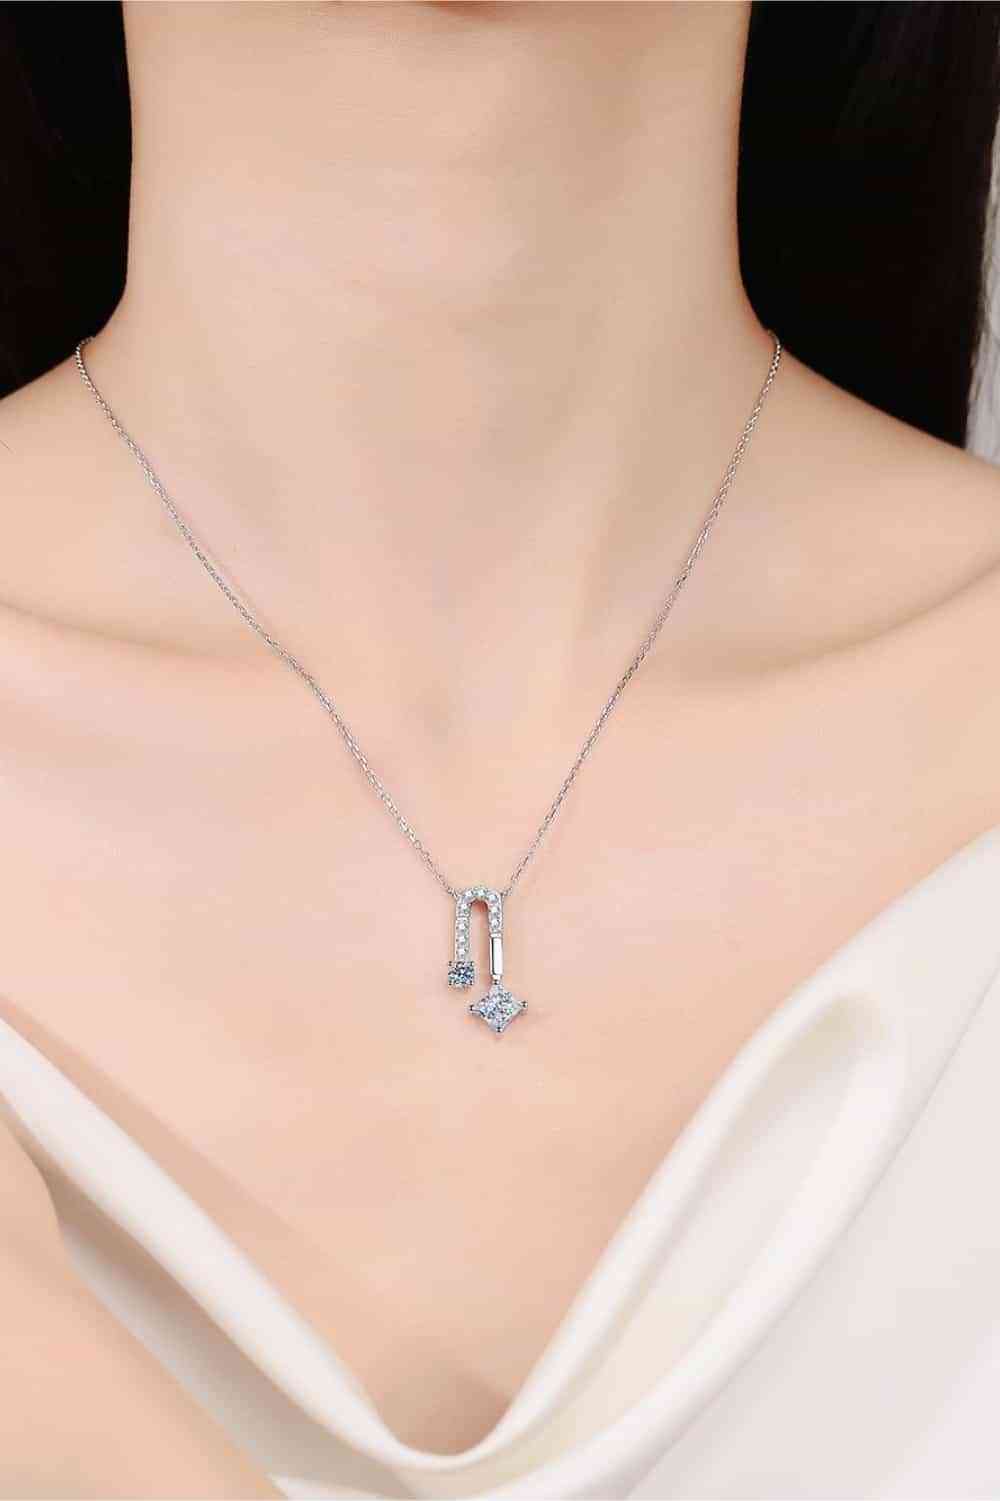 1.3 Carat Moissanite 925 Sterling Silver Necklace around neck